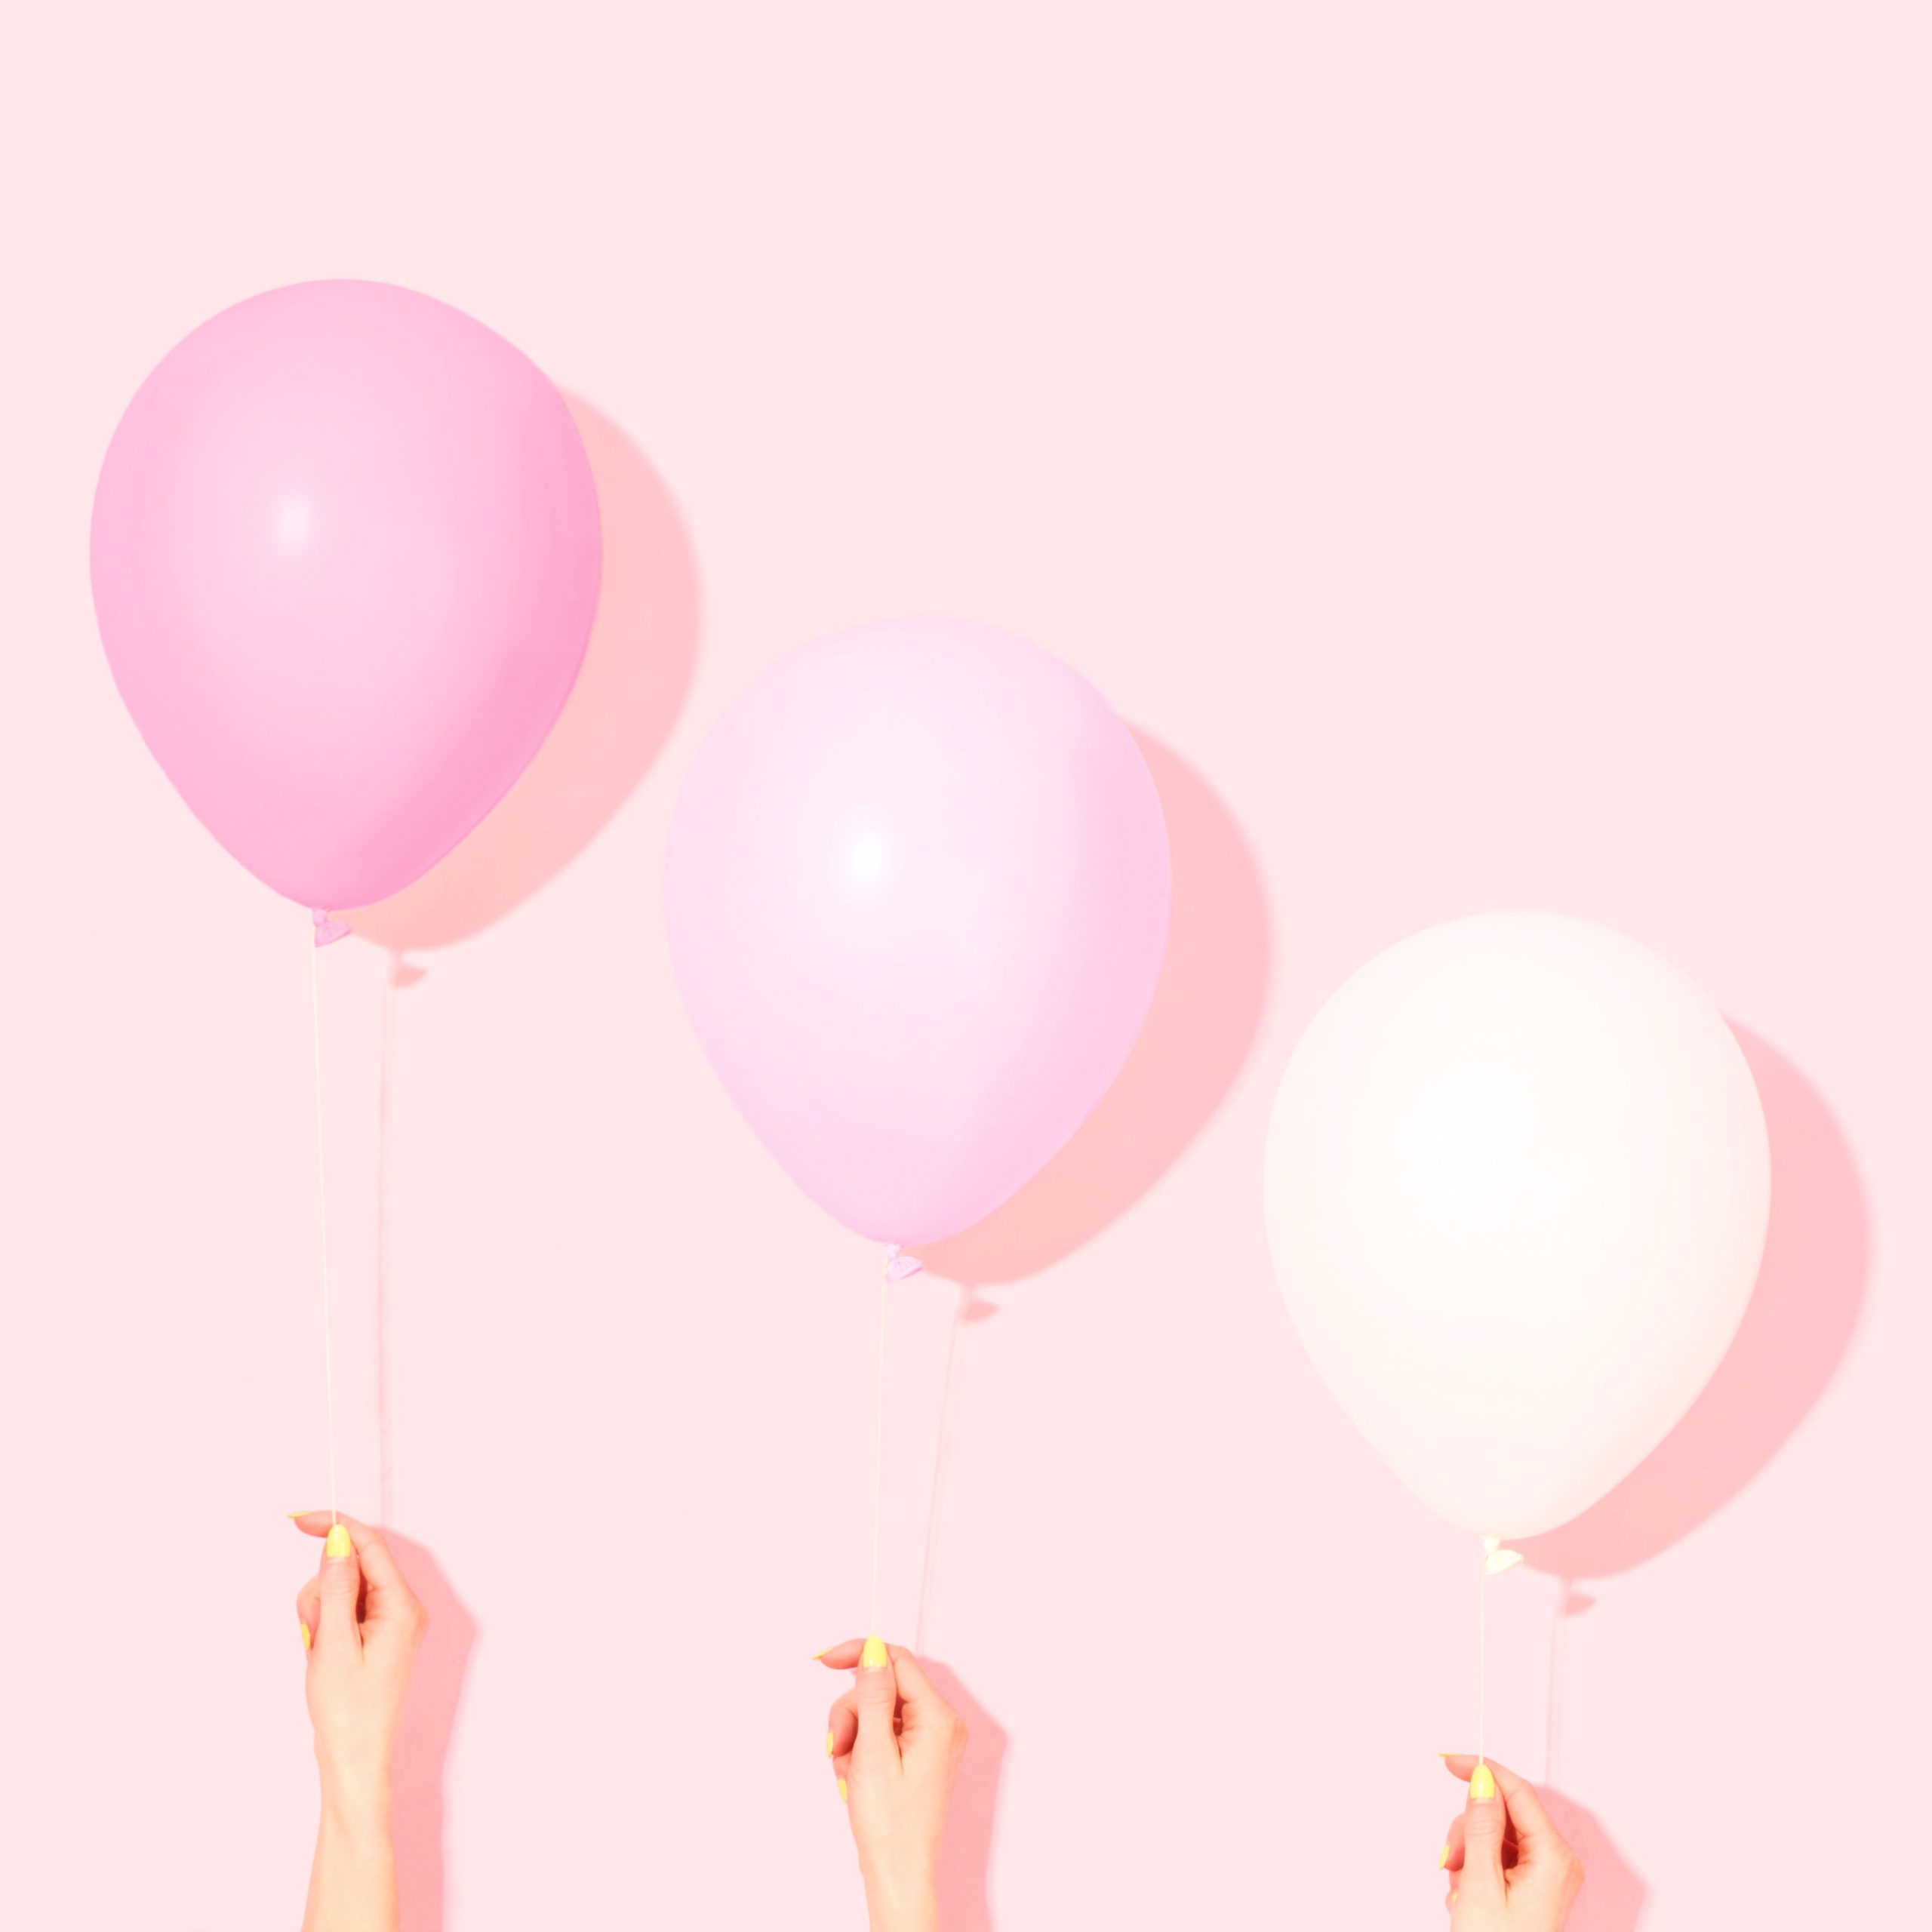 <img src="pink.jpg" alt="pink balloons for valentine's day"/> 